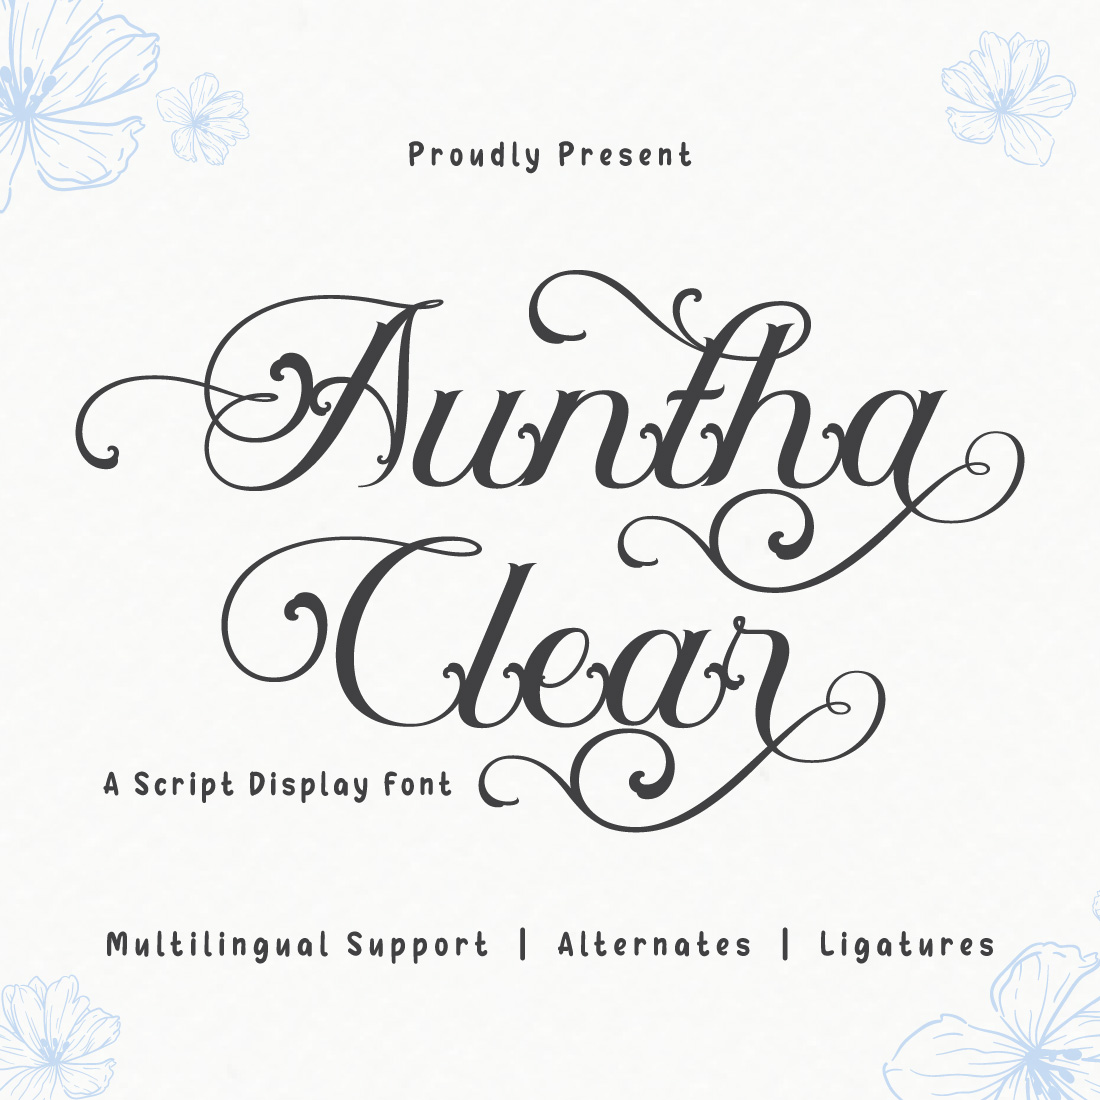 Auntha Clear | Script Font cover image.